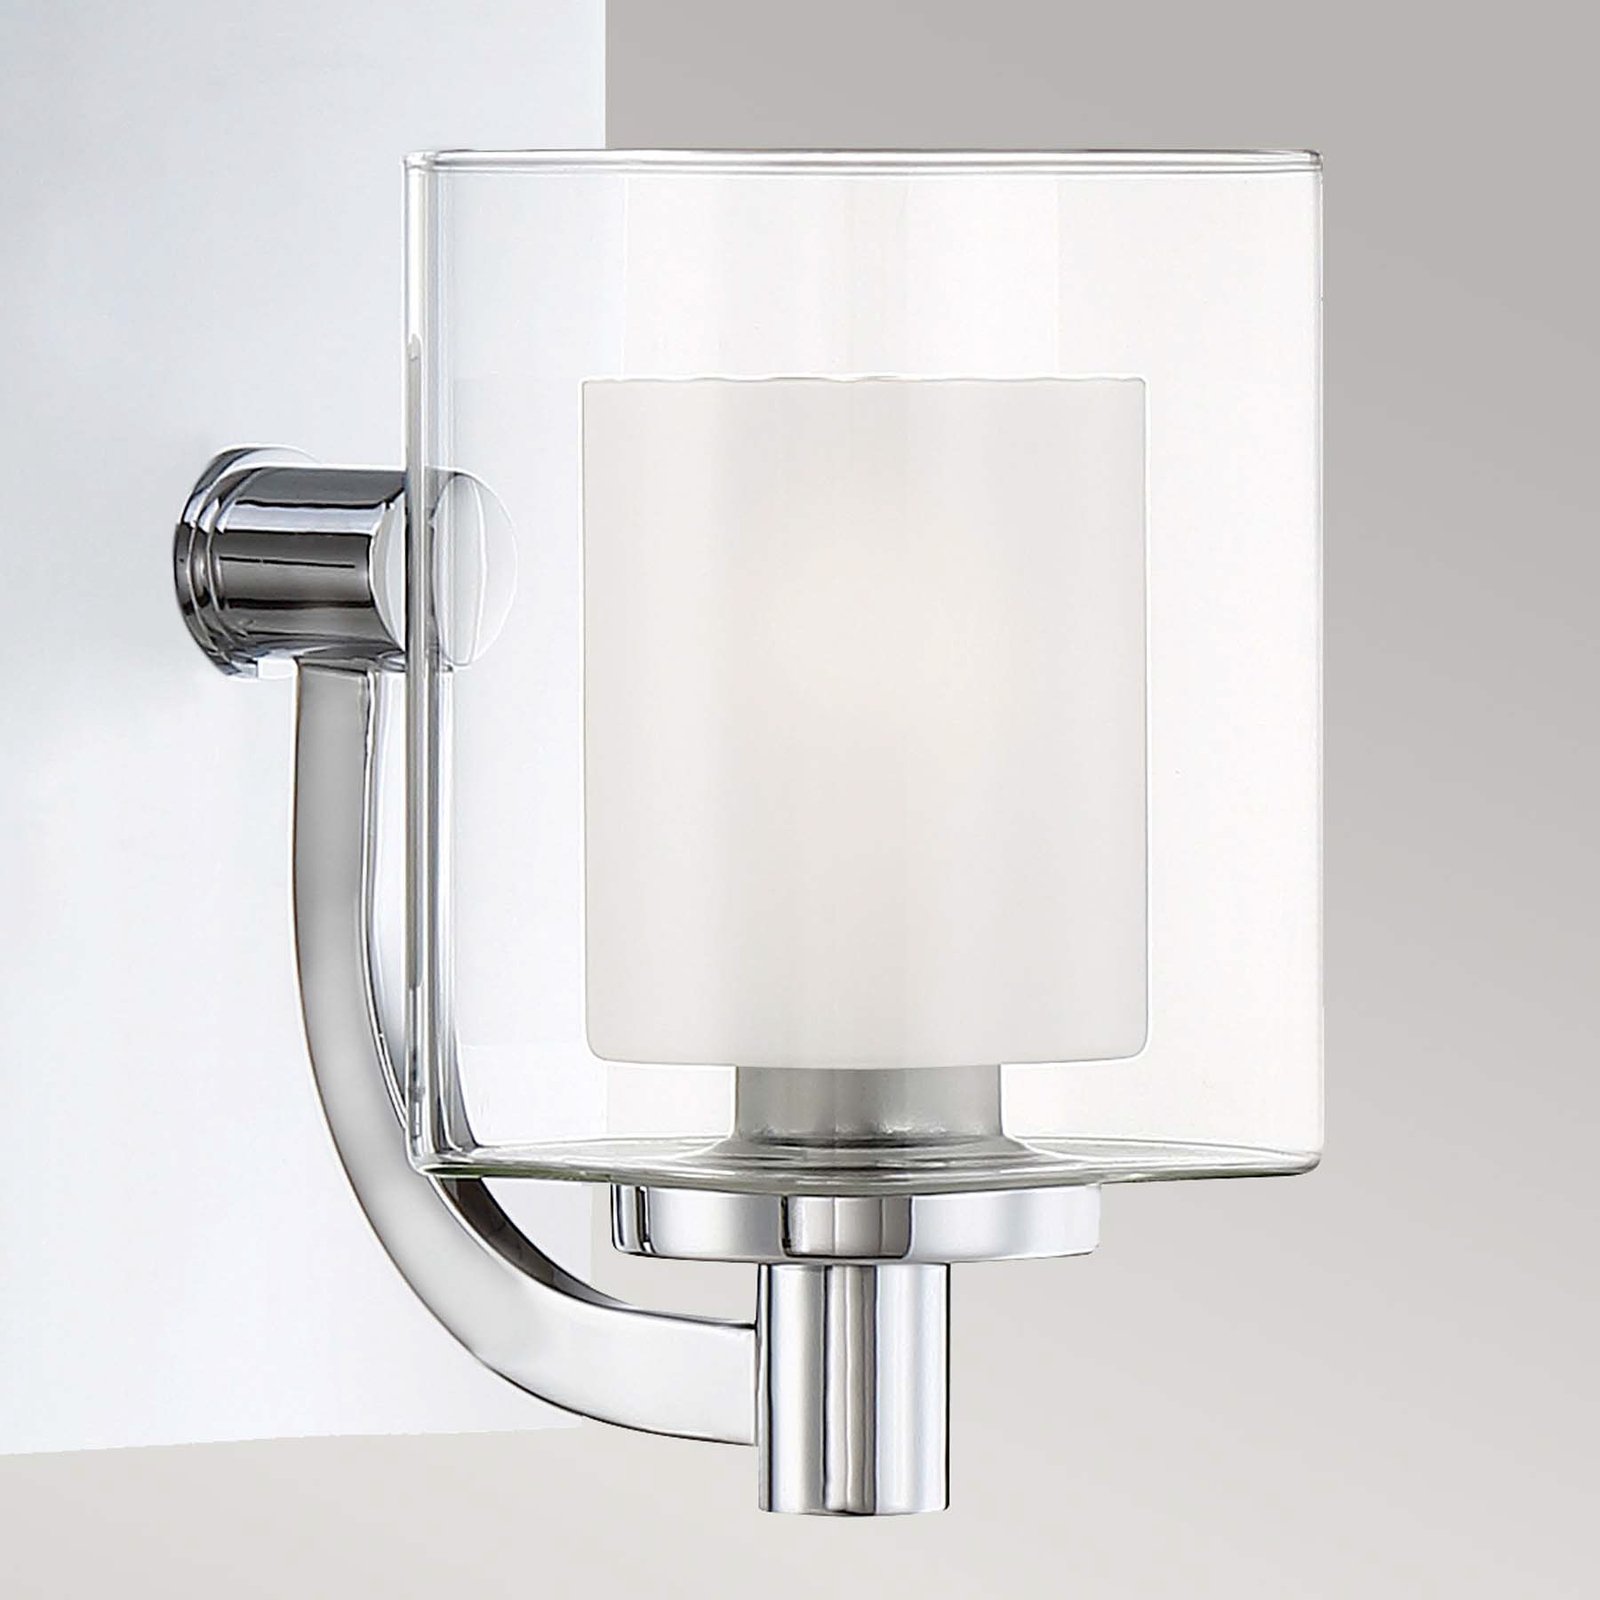 Kolt IP44 wall light with double glass shade, 1-bulb